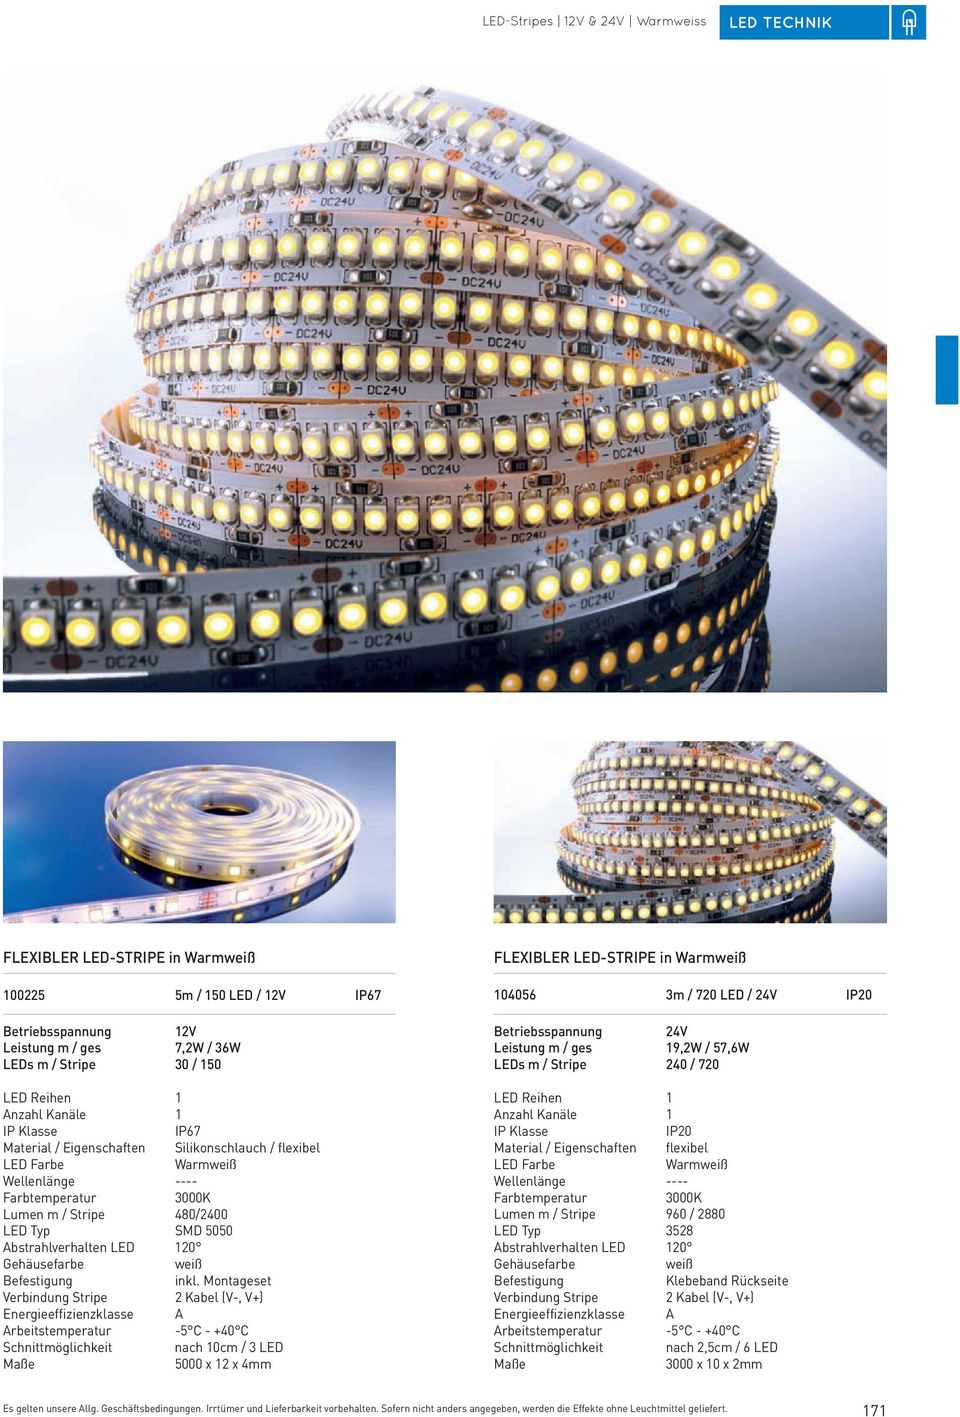 Montageset 2 Kabel (V-, V+) Schnittmöglichkeit nach 10cm / 3 LED 5000 x 12 x 4mm FLEXIBLER LED-STRIPE in Warm 104056 3m / 720 LED / Leistung m / ges 19,2W / 57,6W LEDs m / Stripe 240 / 720 Anzahl